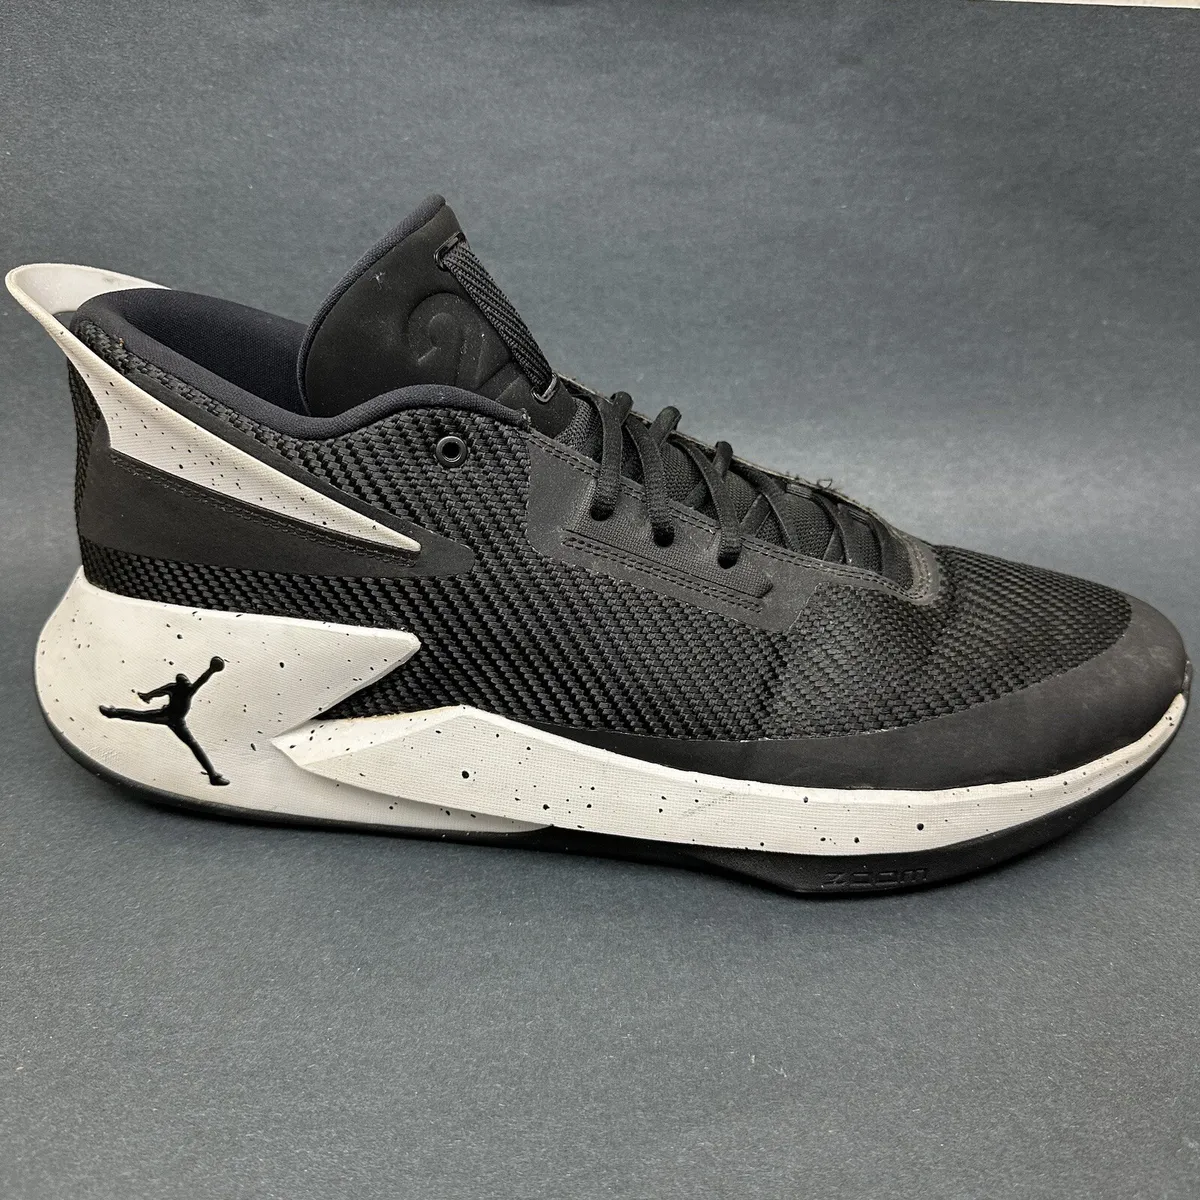 Nike Mens Air Jordan Fly Lockdown AJ9499-010 Black Basketball Shoes Size 18